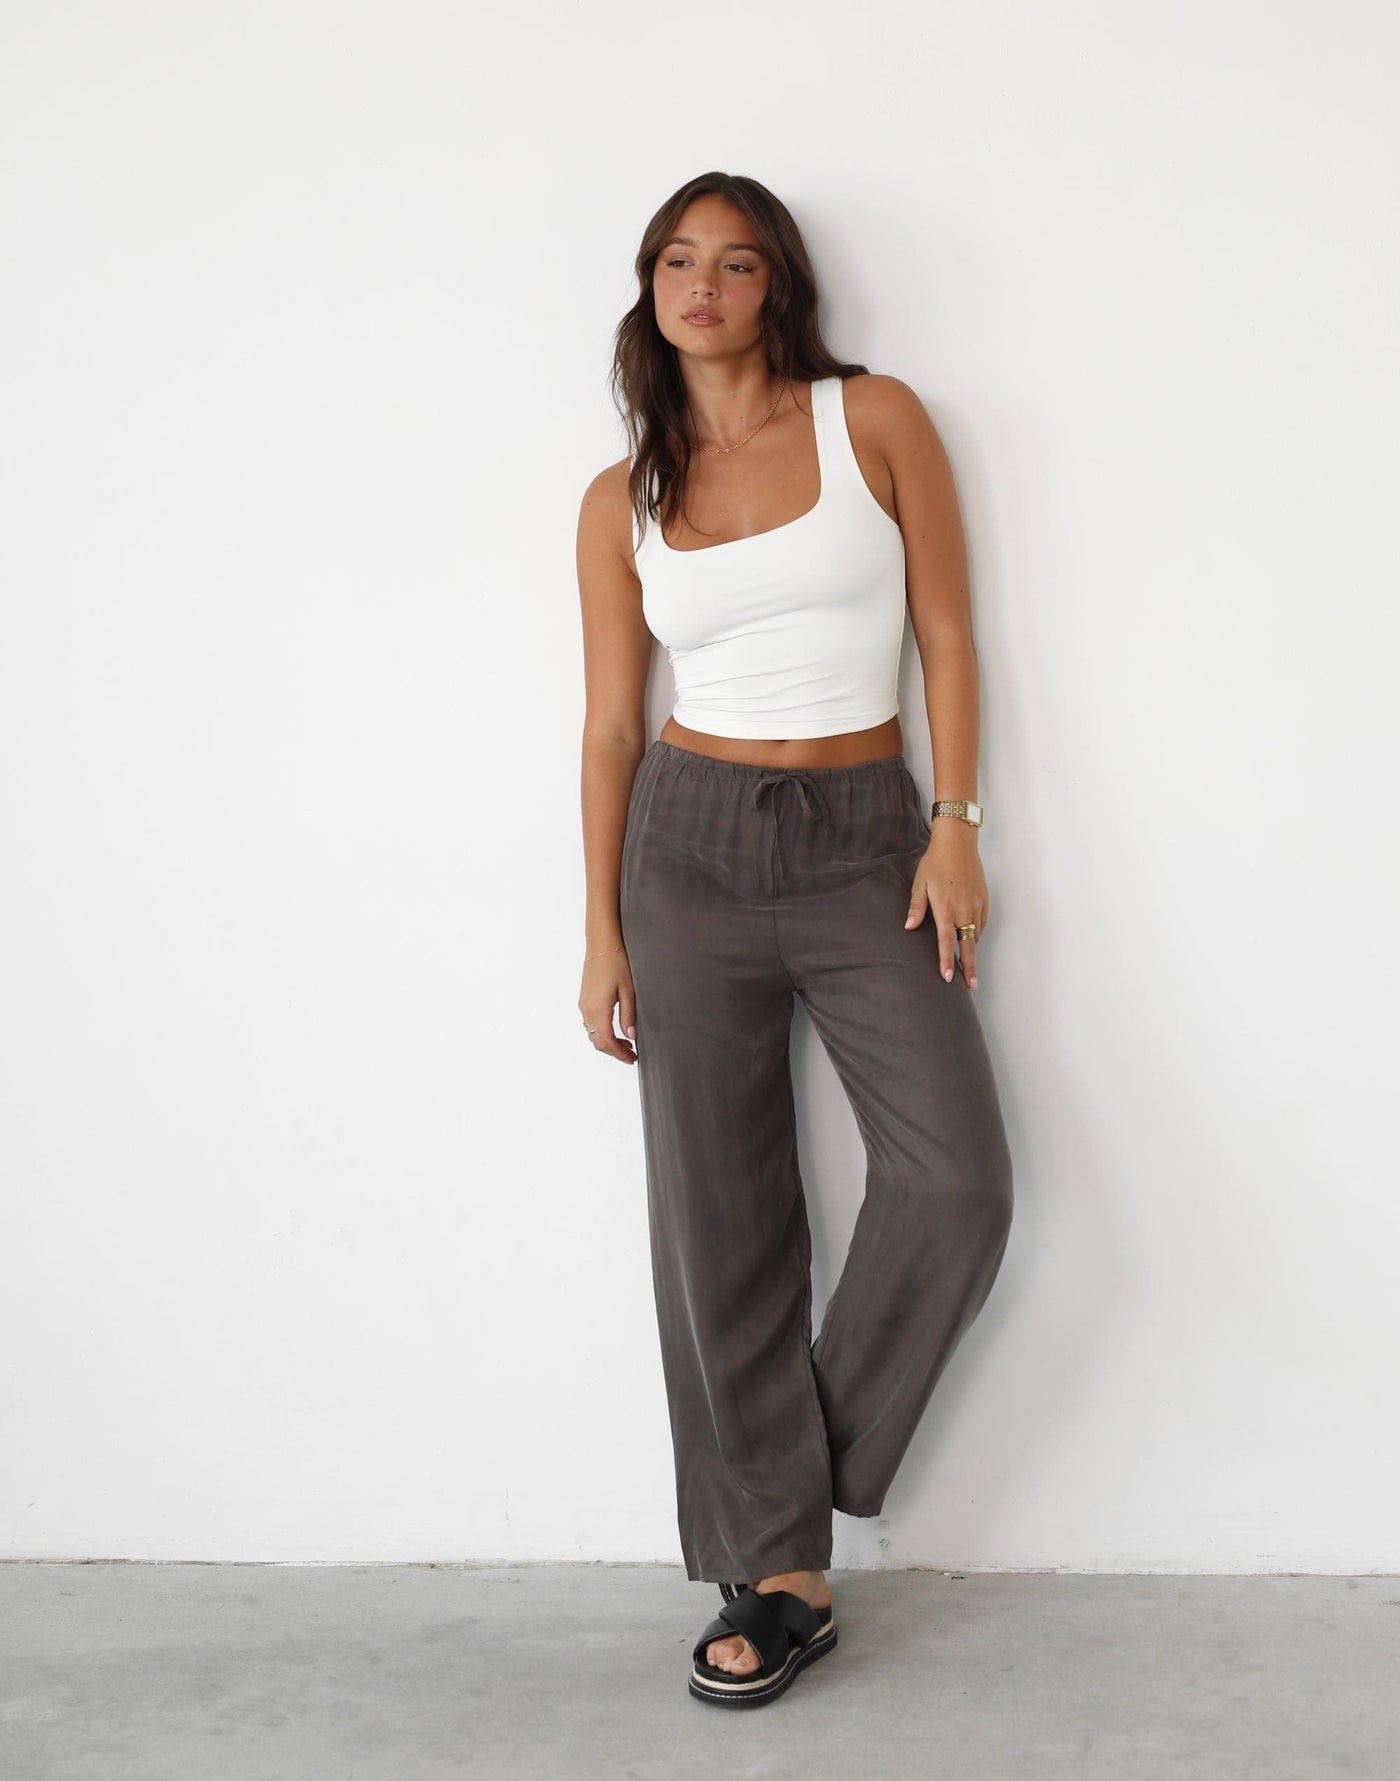 Elska Pants (Warm Grey) | Adjustable Flowy Pants - Women's Pants - Charcoal Clothing